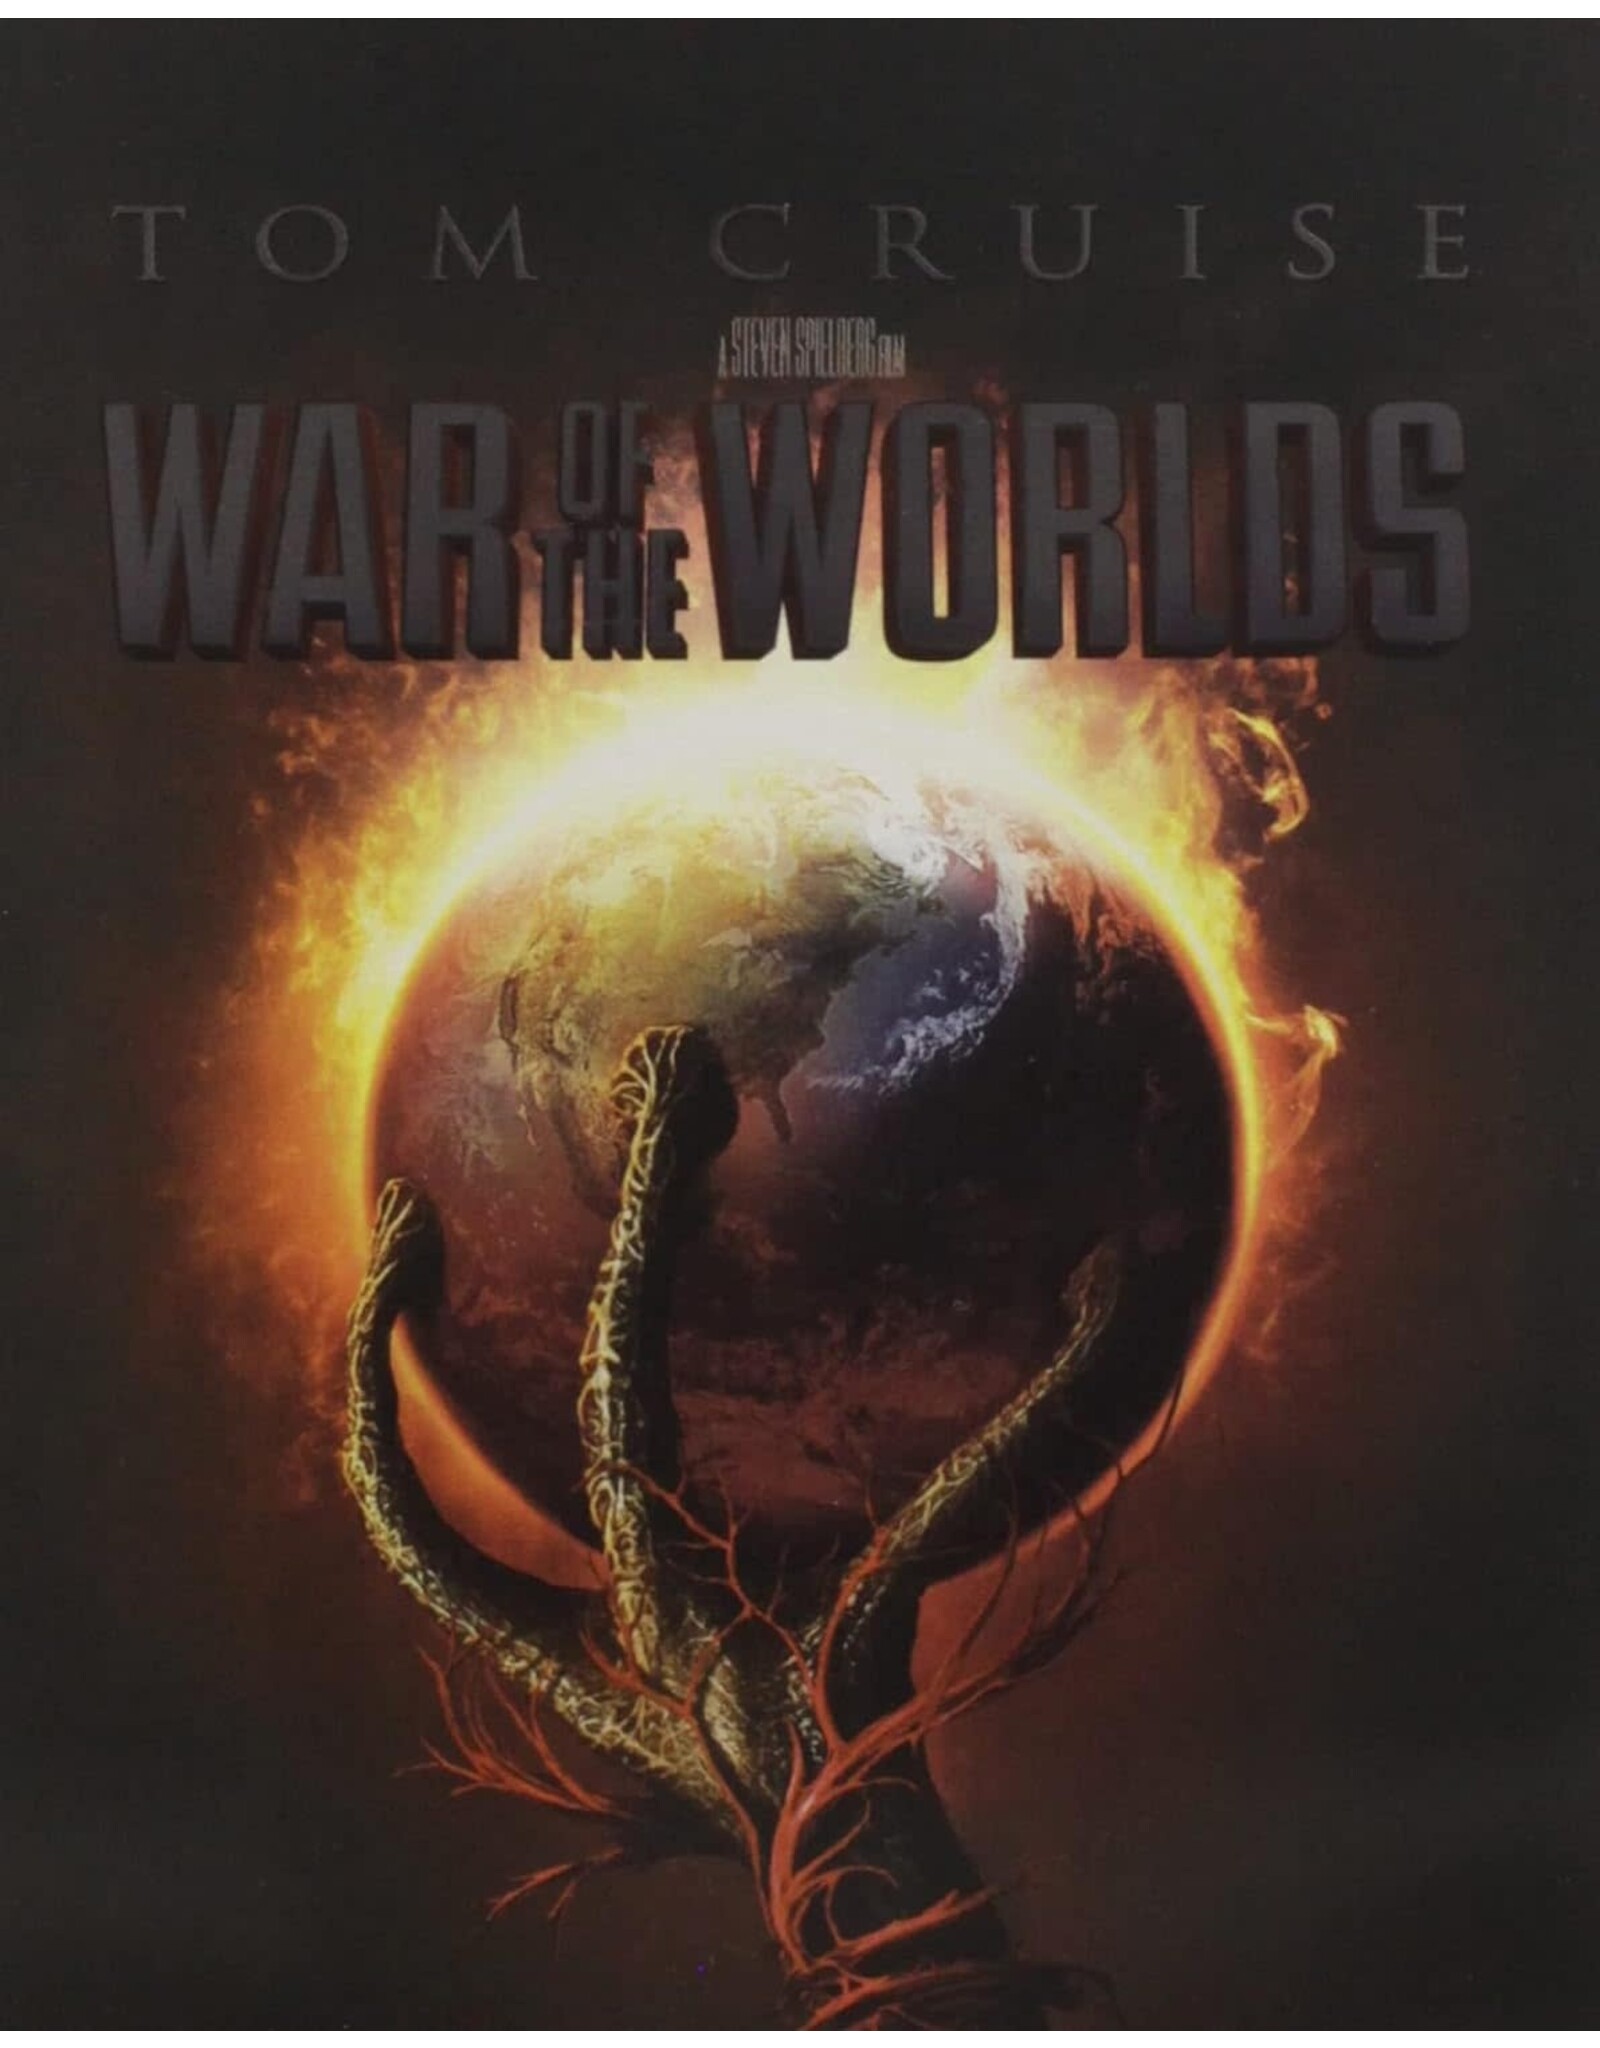 Cult & Cool War of the Worlds (2005) - Steelbook (4K UHD, Brand New)